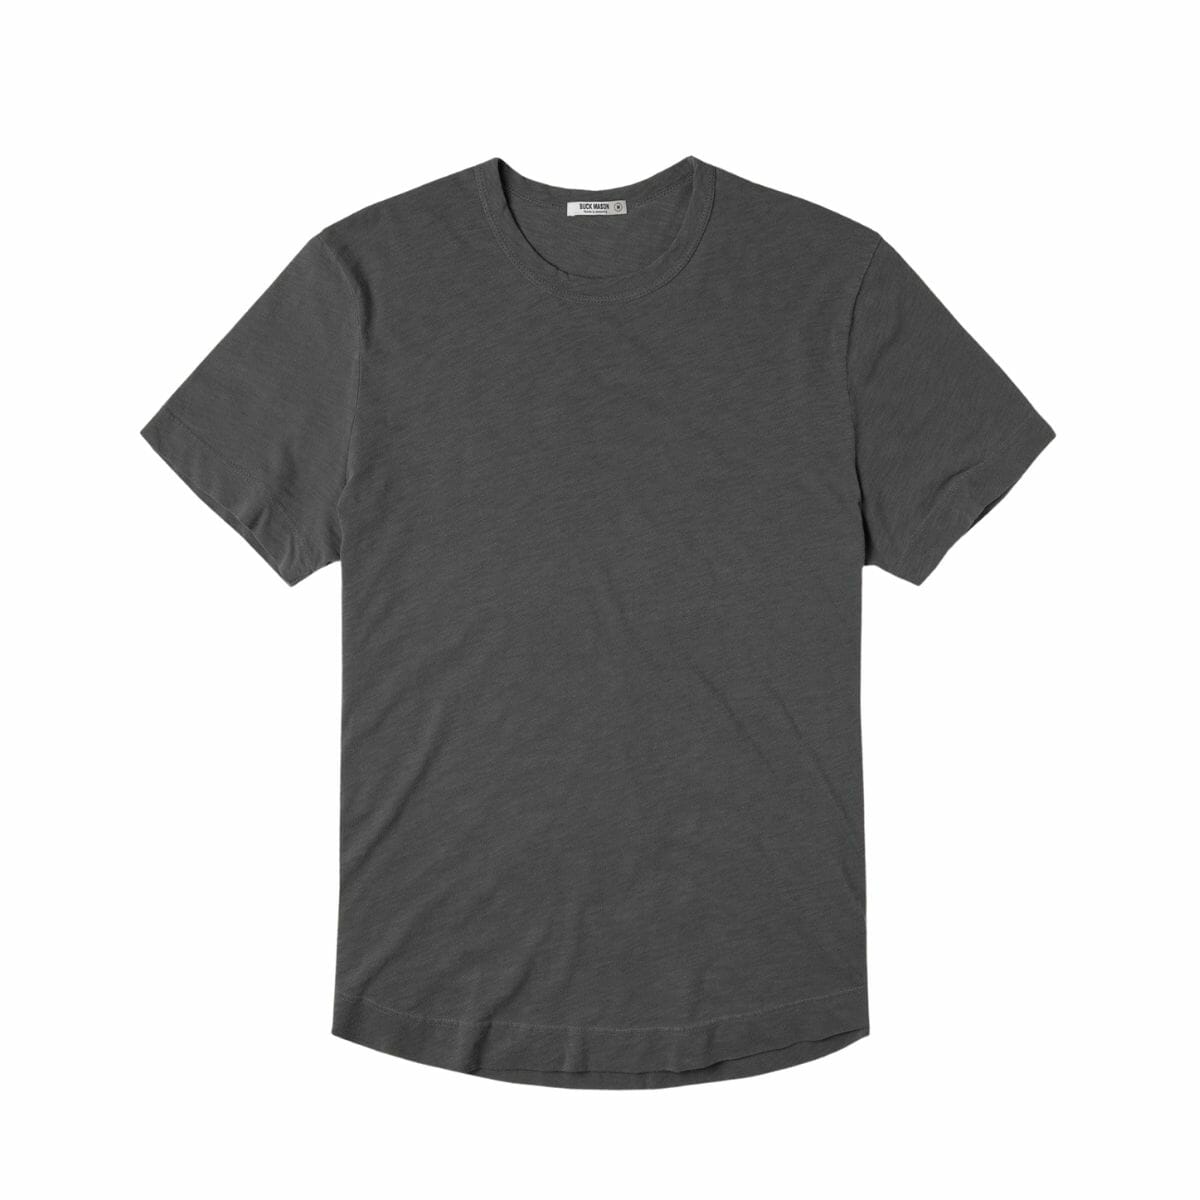 Buck Mason T-Shirt Review: Are Buck Mason Tees Worth it? 19